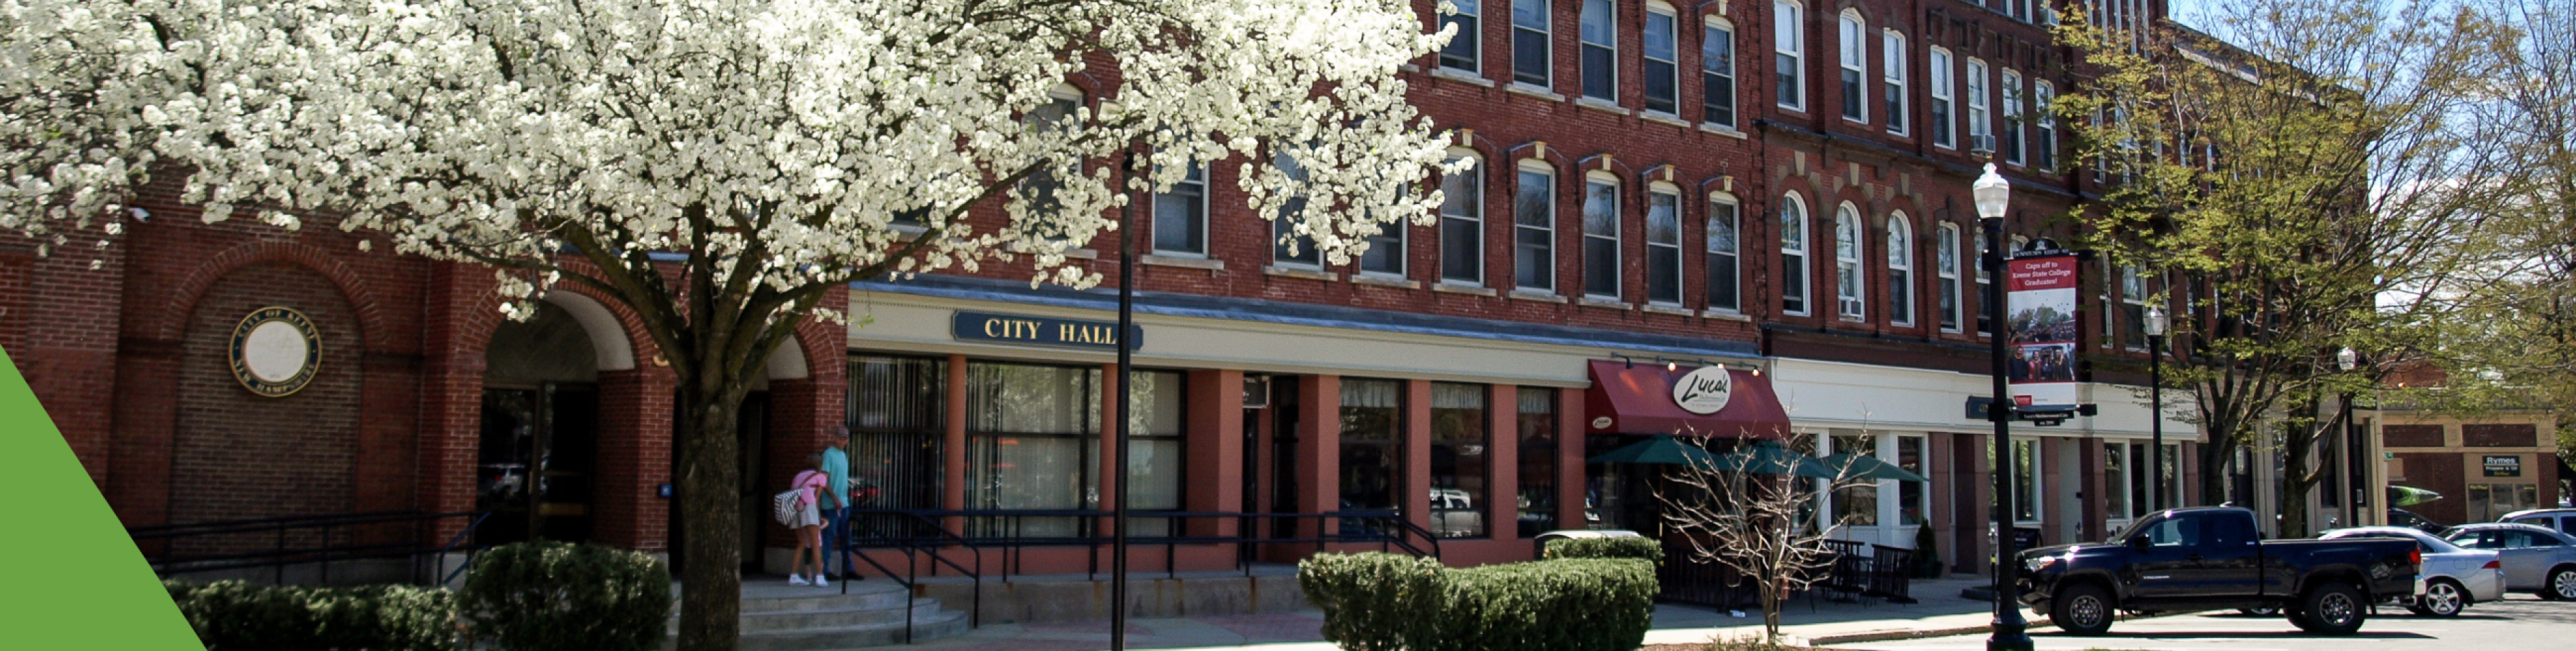 City Hall Photo Banner